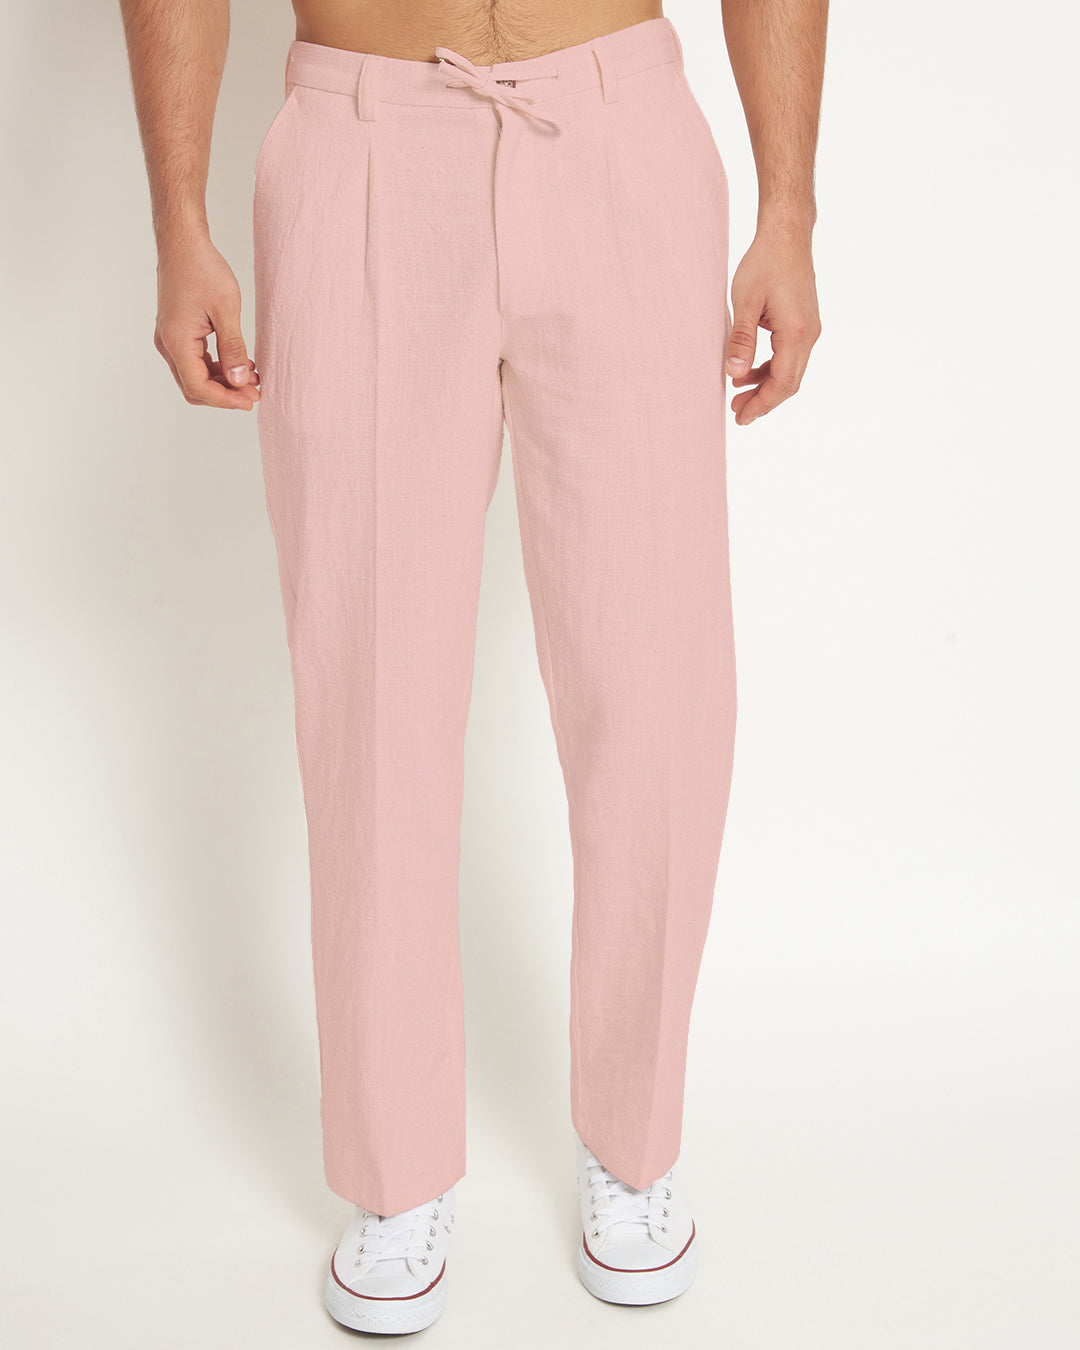 Combo: Casual Ease Beige & Fondant Pink Men's Pants - Set of 2